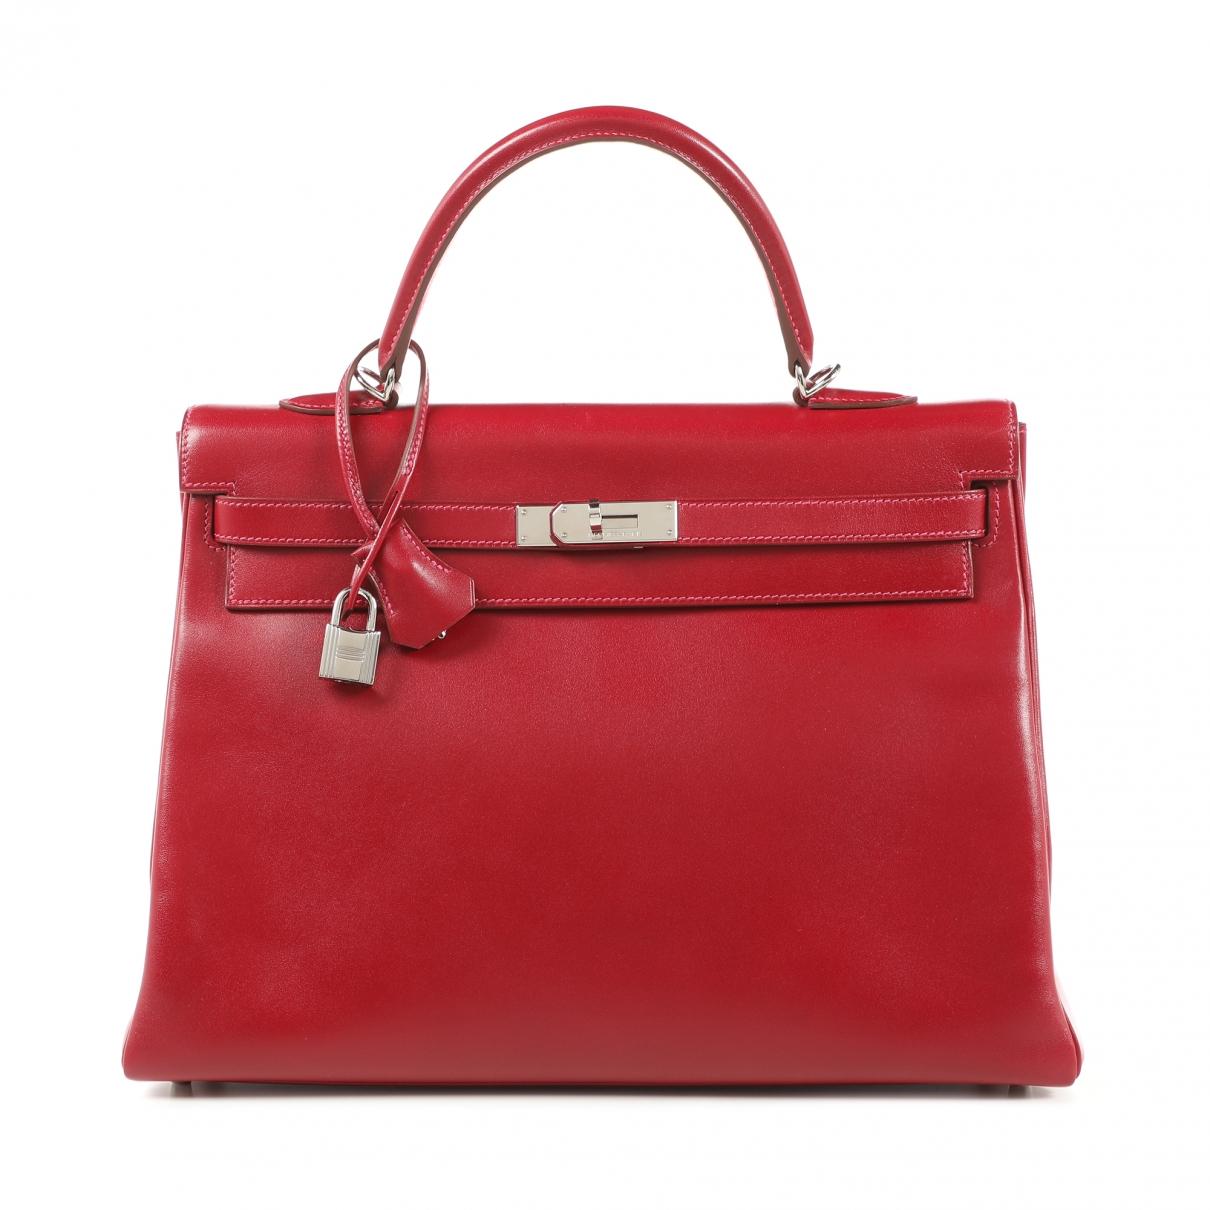 Lyst - Hermès Kelly 35 Red Leather Handbag in Red